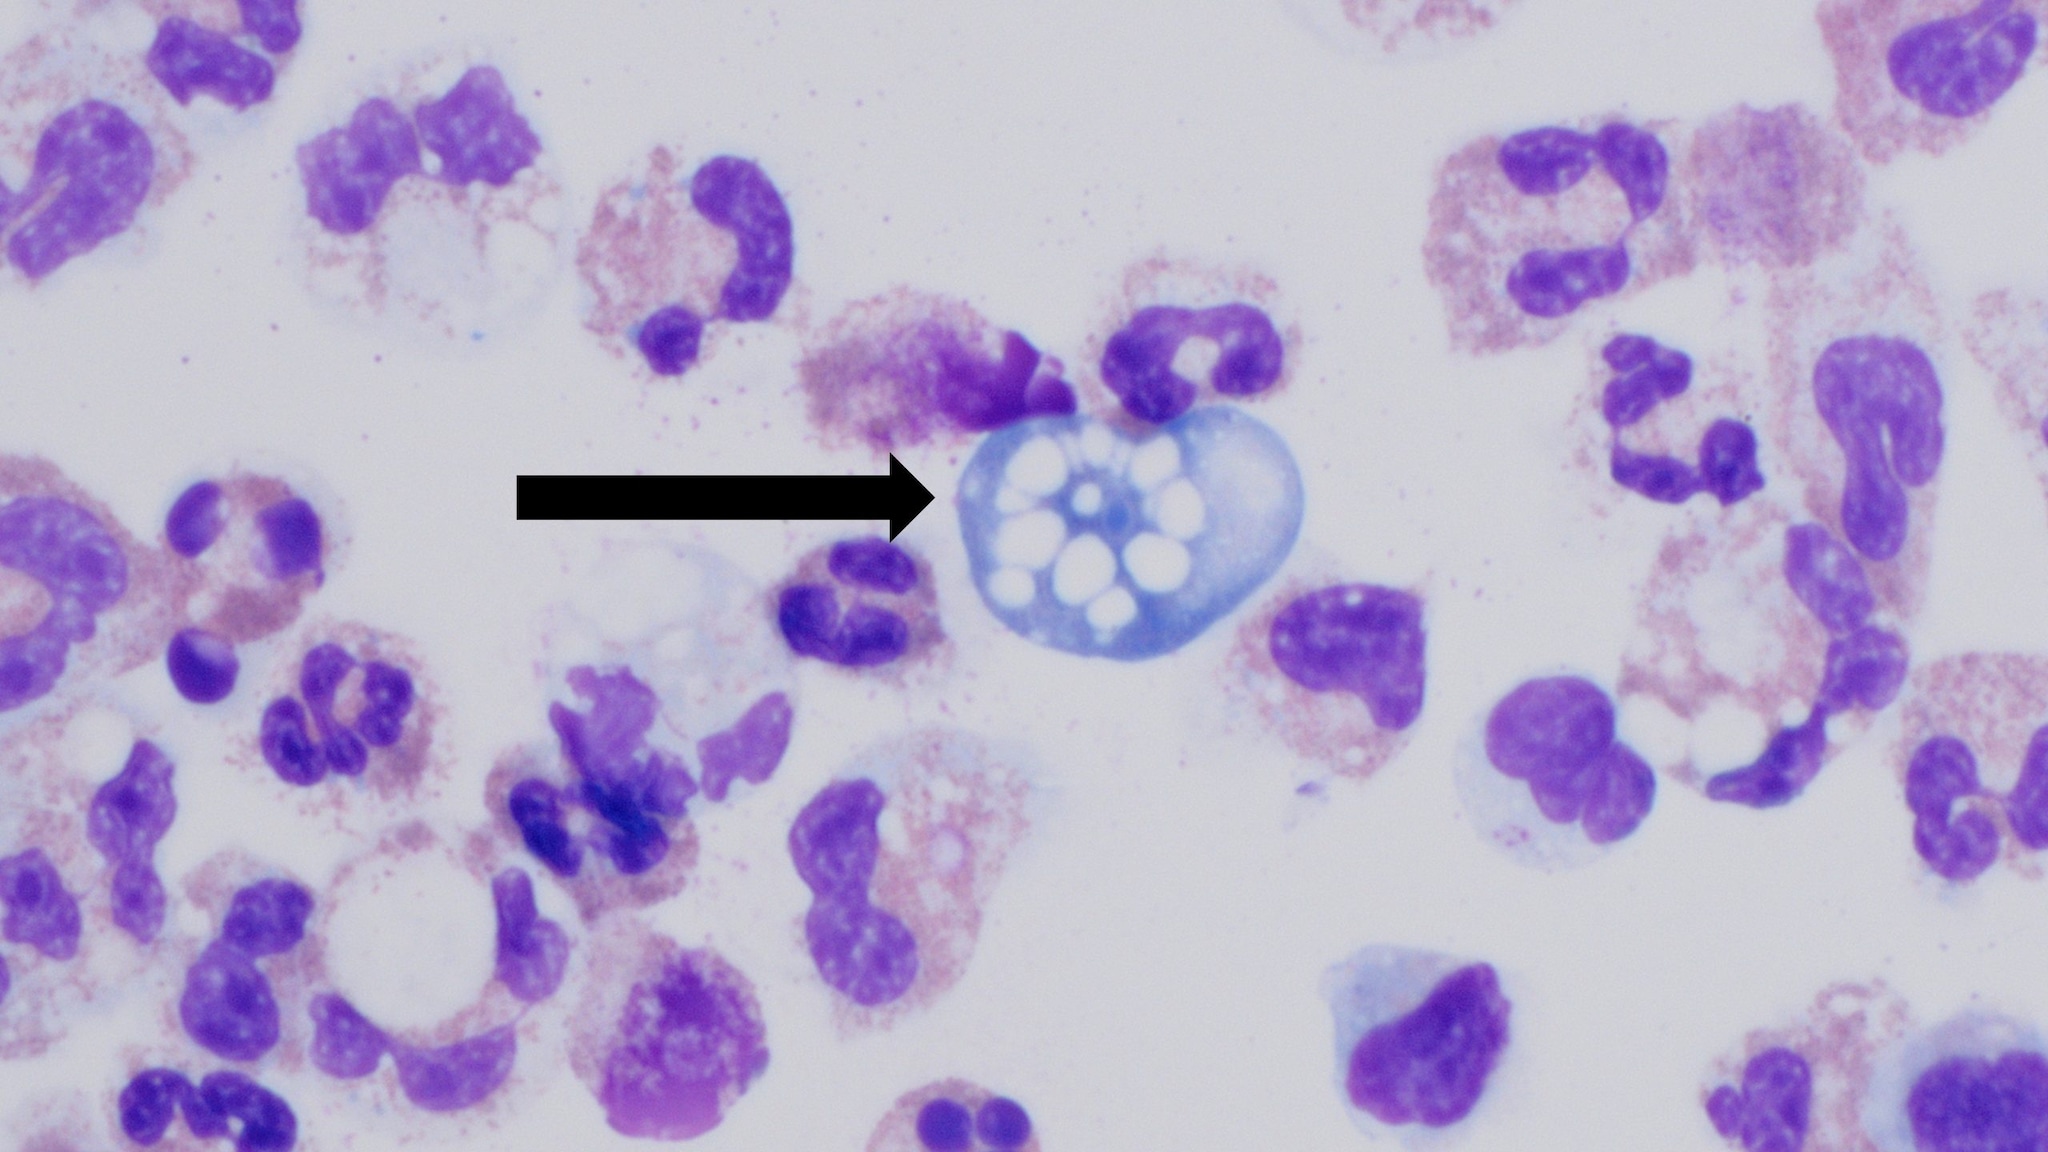 High resolution of Naegleria fowleri ameba in a person's cerebrospinal fluid